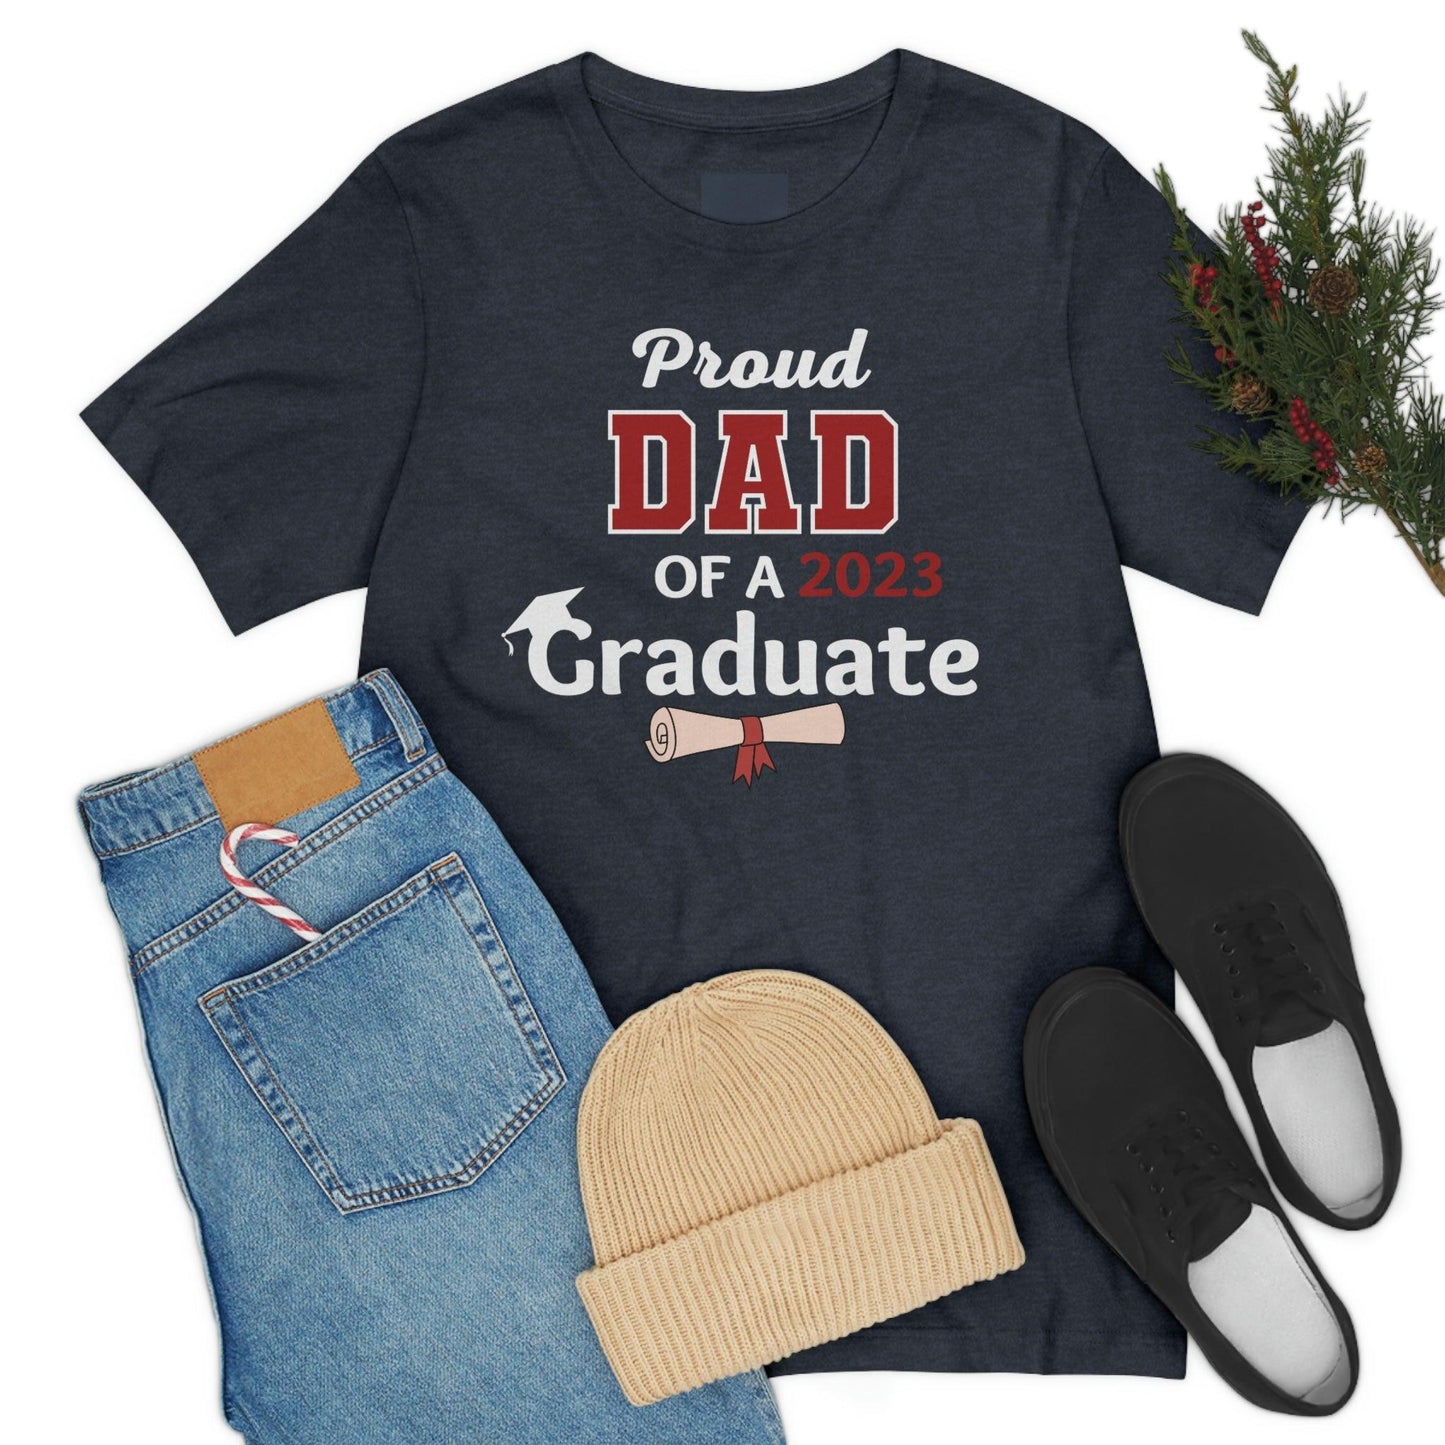 Proud Dad of a graduate - Graduation shirt - Graduation gift